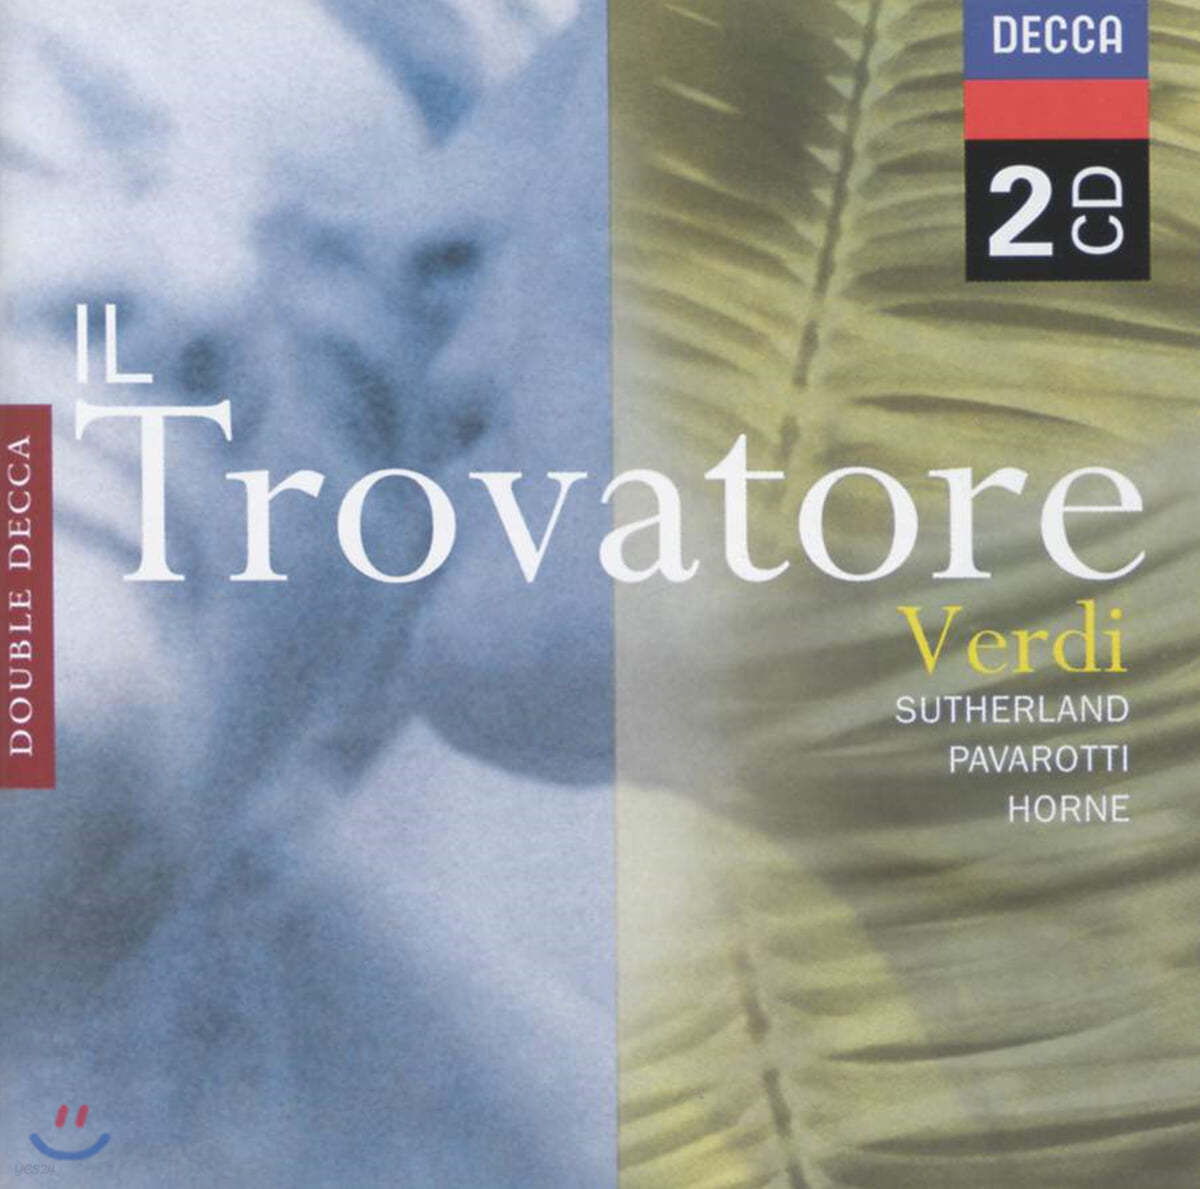 Joan Sutherland 베르디: 일 트로바토레 (Verdi: Il Trovatore)